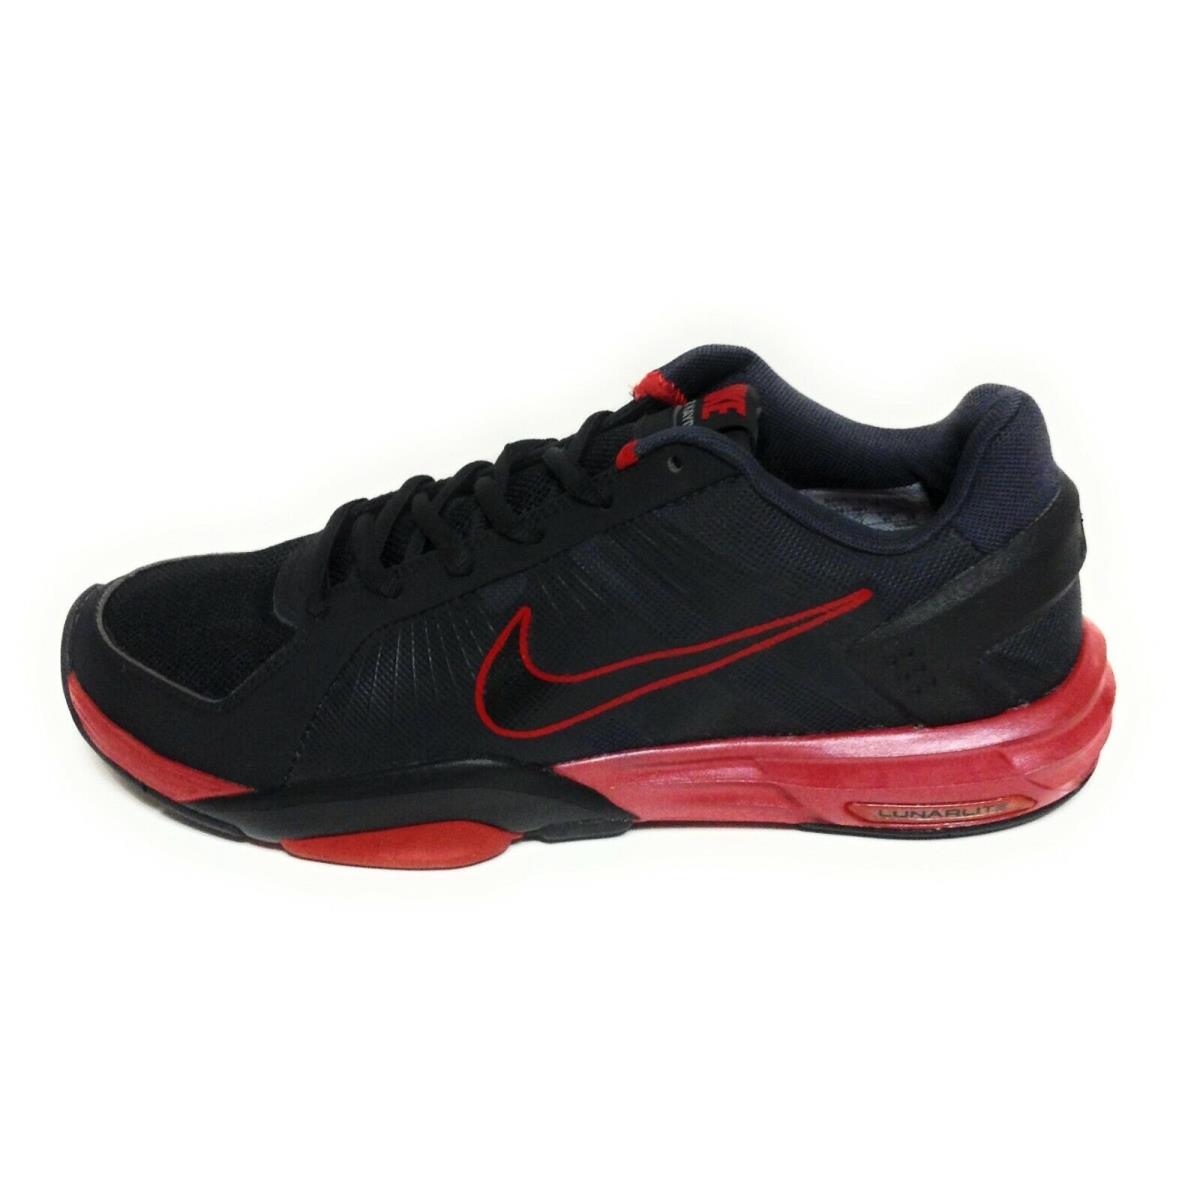 Mens Nike Lunar Kayoss 386481 001 Black Red 2008 Deadstock Sneakers Shoes